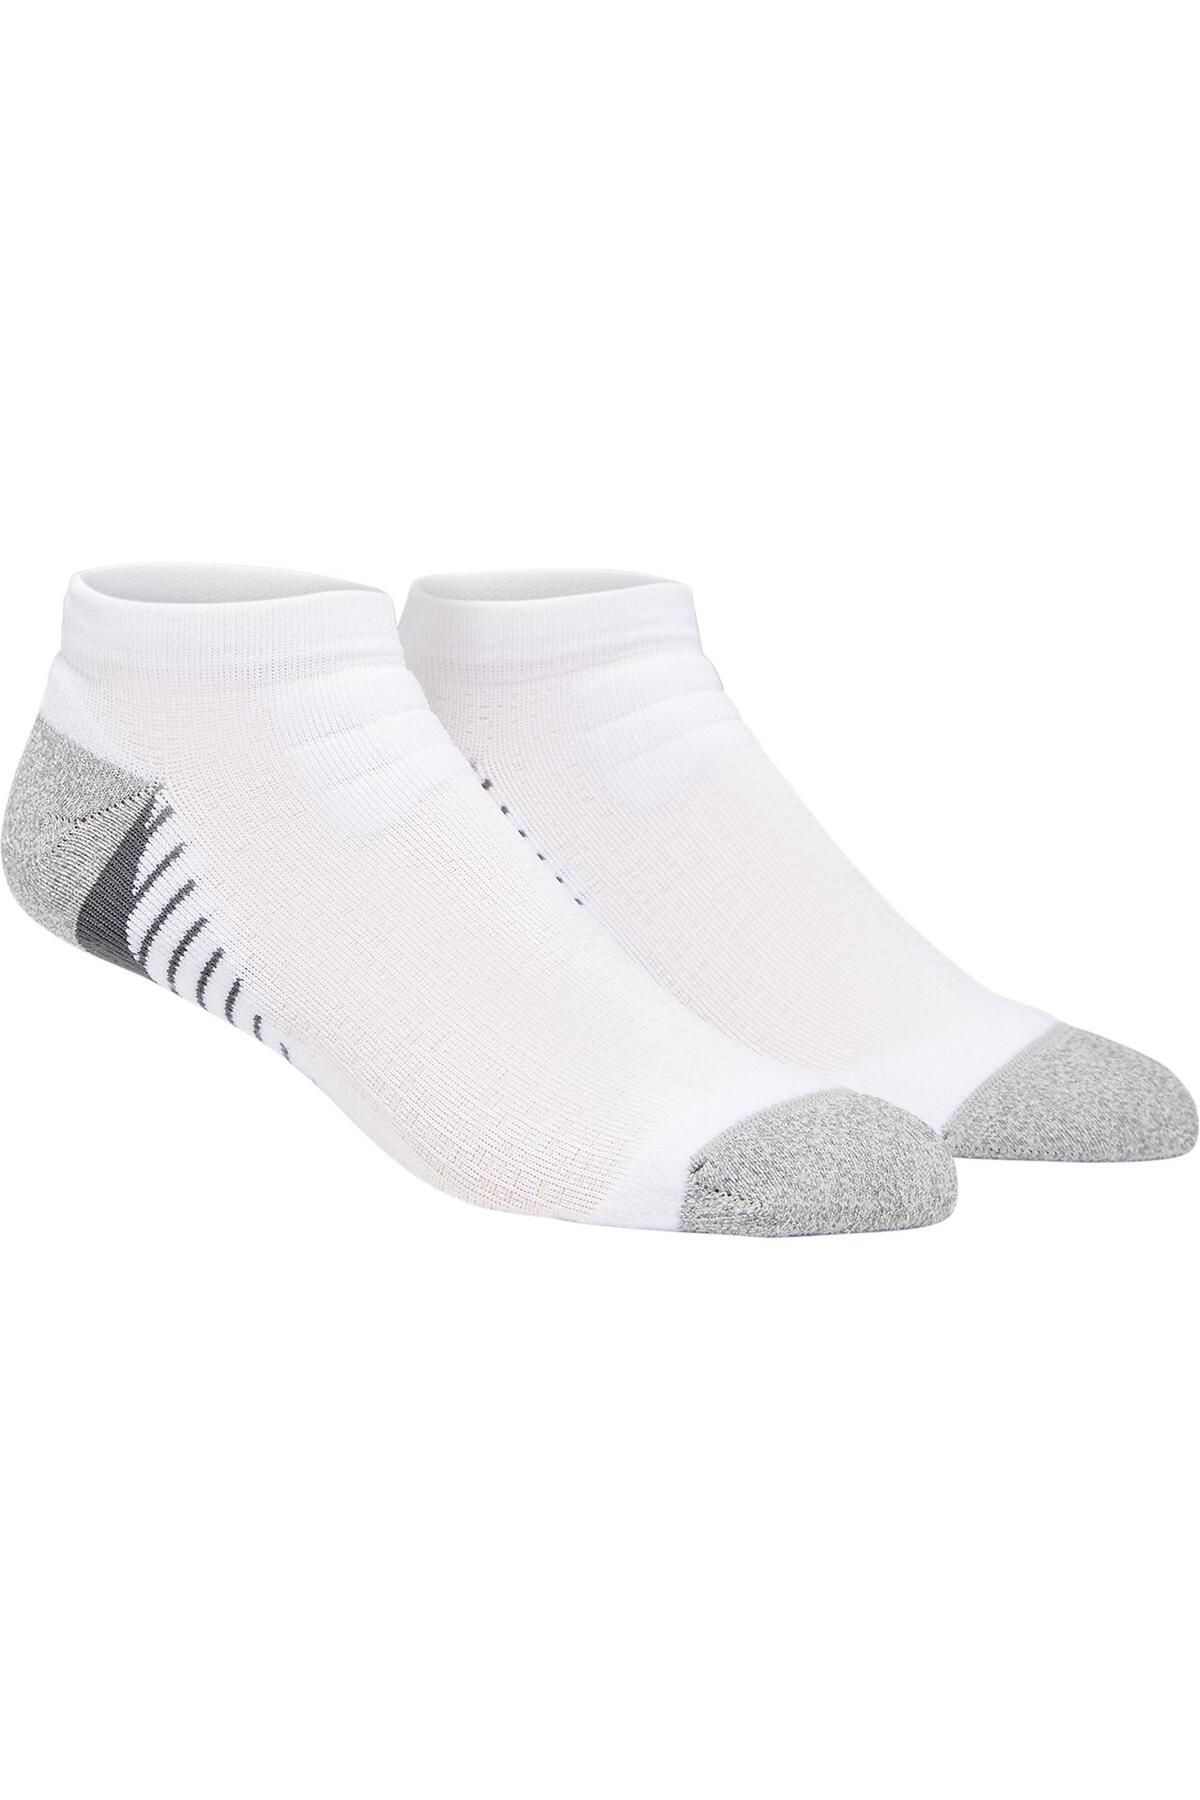 Asics Ultra Comfort Quarter Sock Unisex Beyaz Çorap 3013a269-100